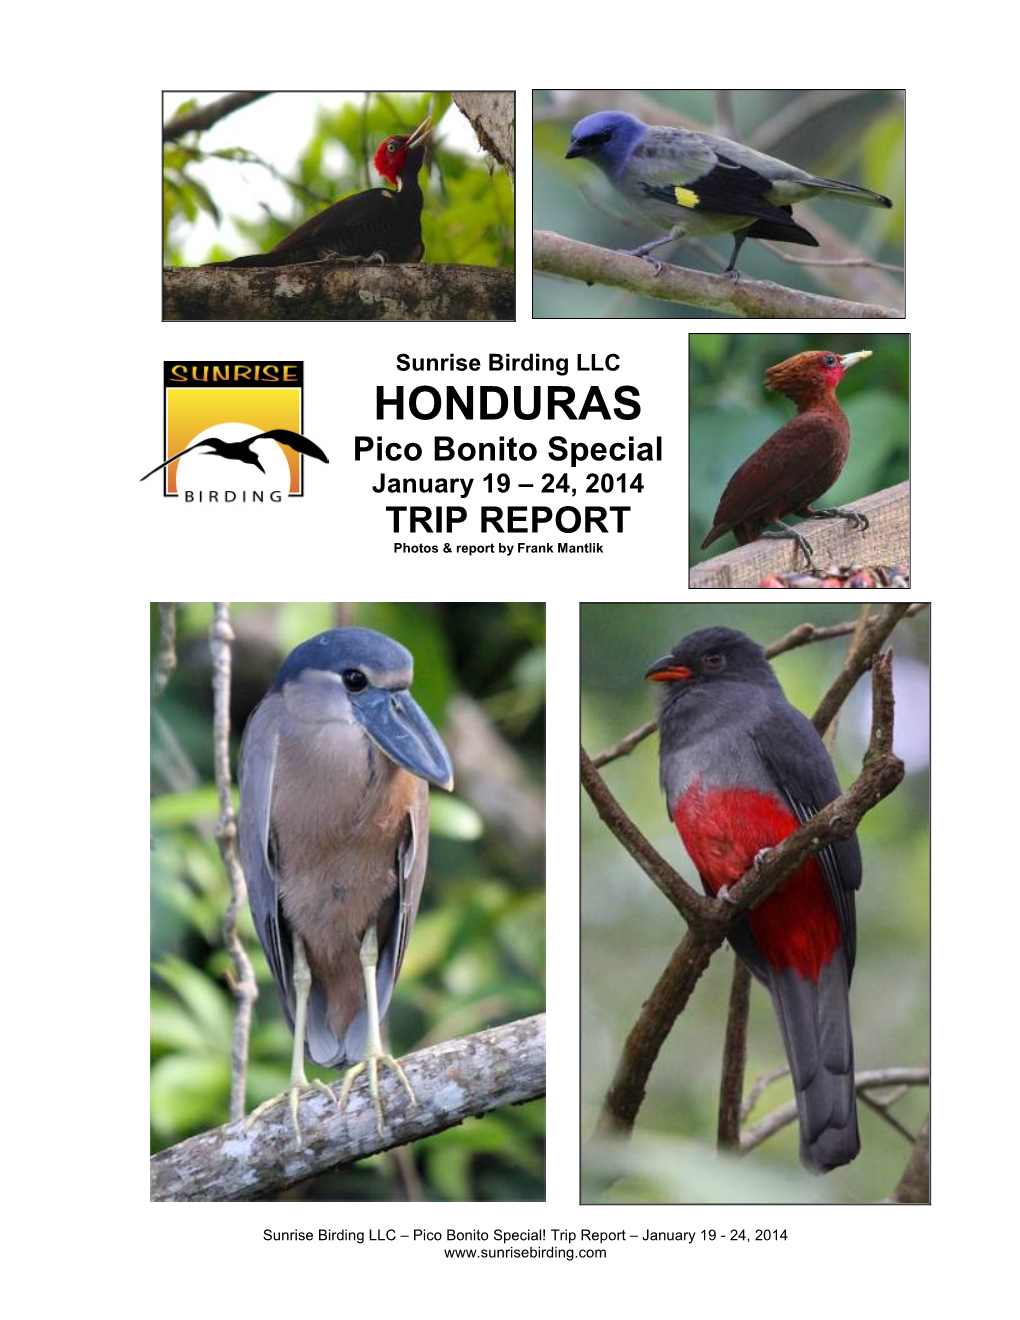 HONDURAS Pico Bonito Special January 19 – 24, 2014 TRIP REPORT Photos & Report by Frank Mantlik